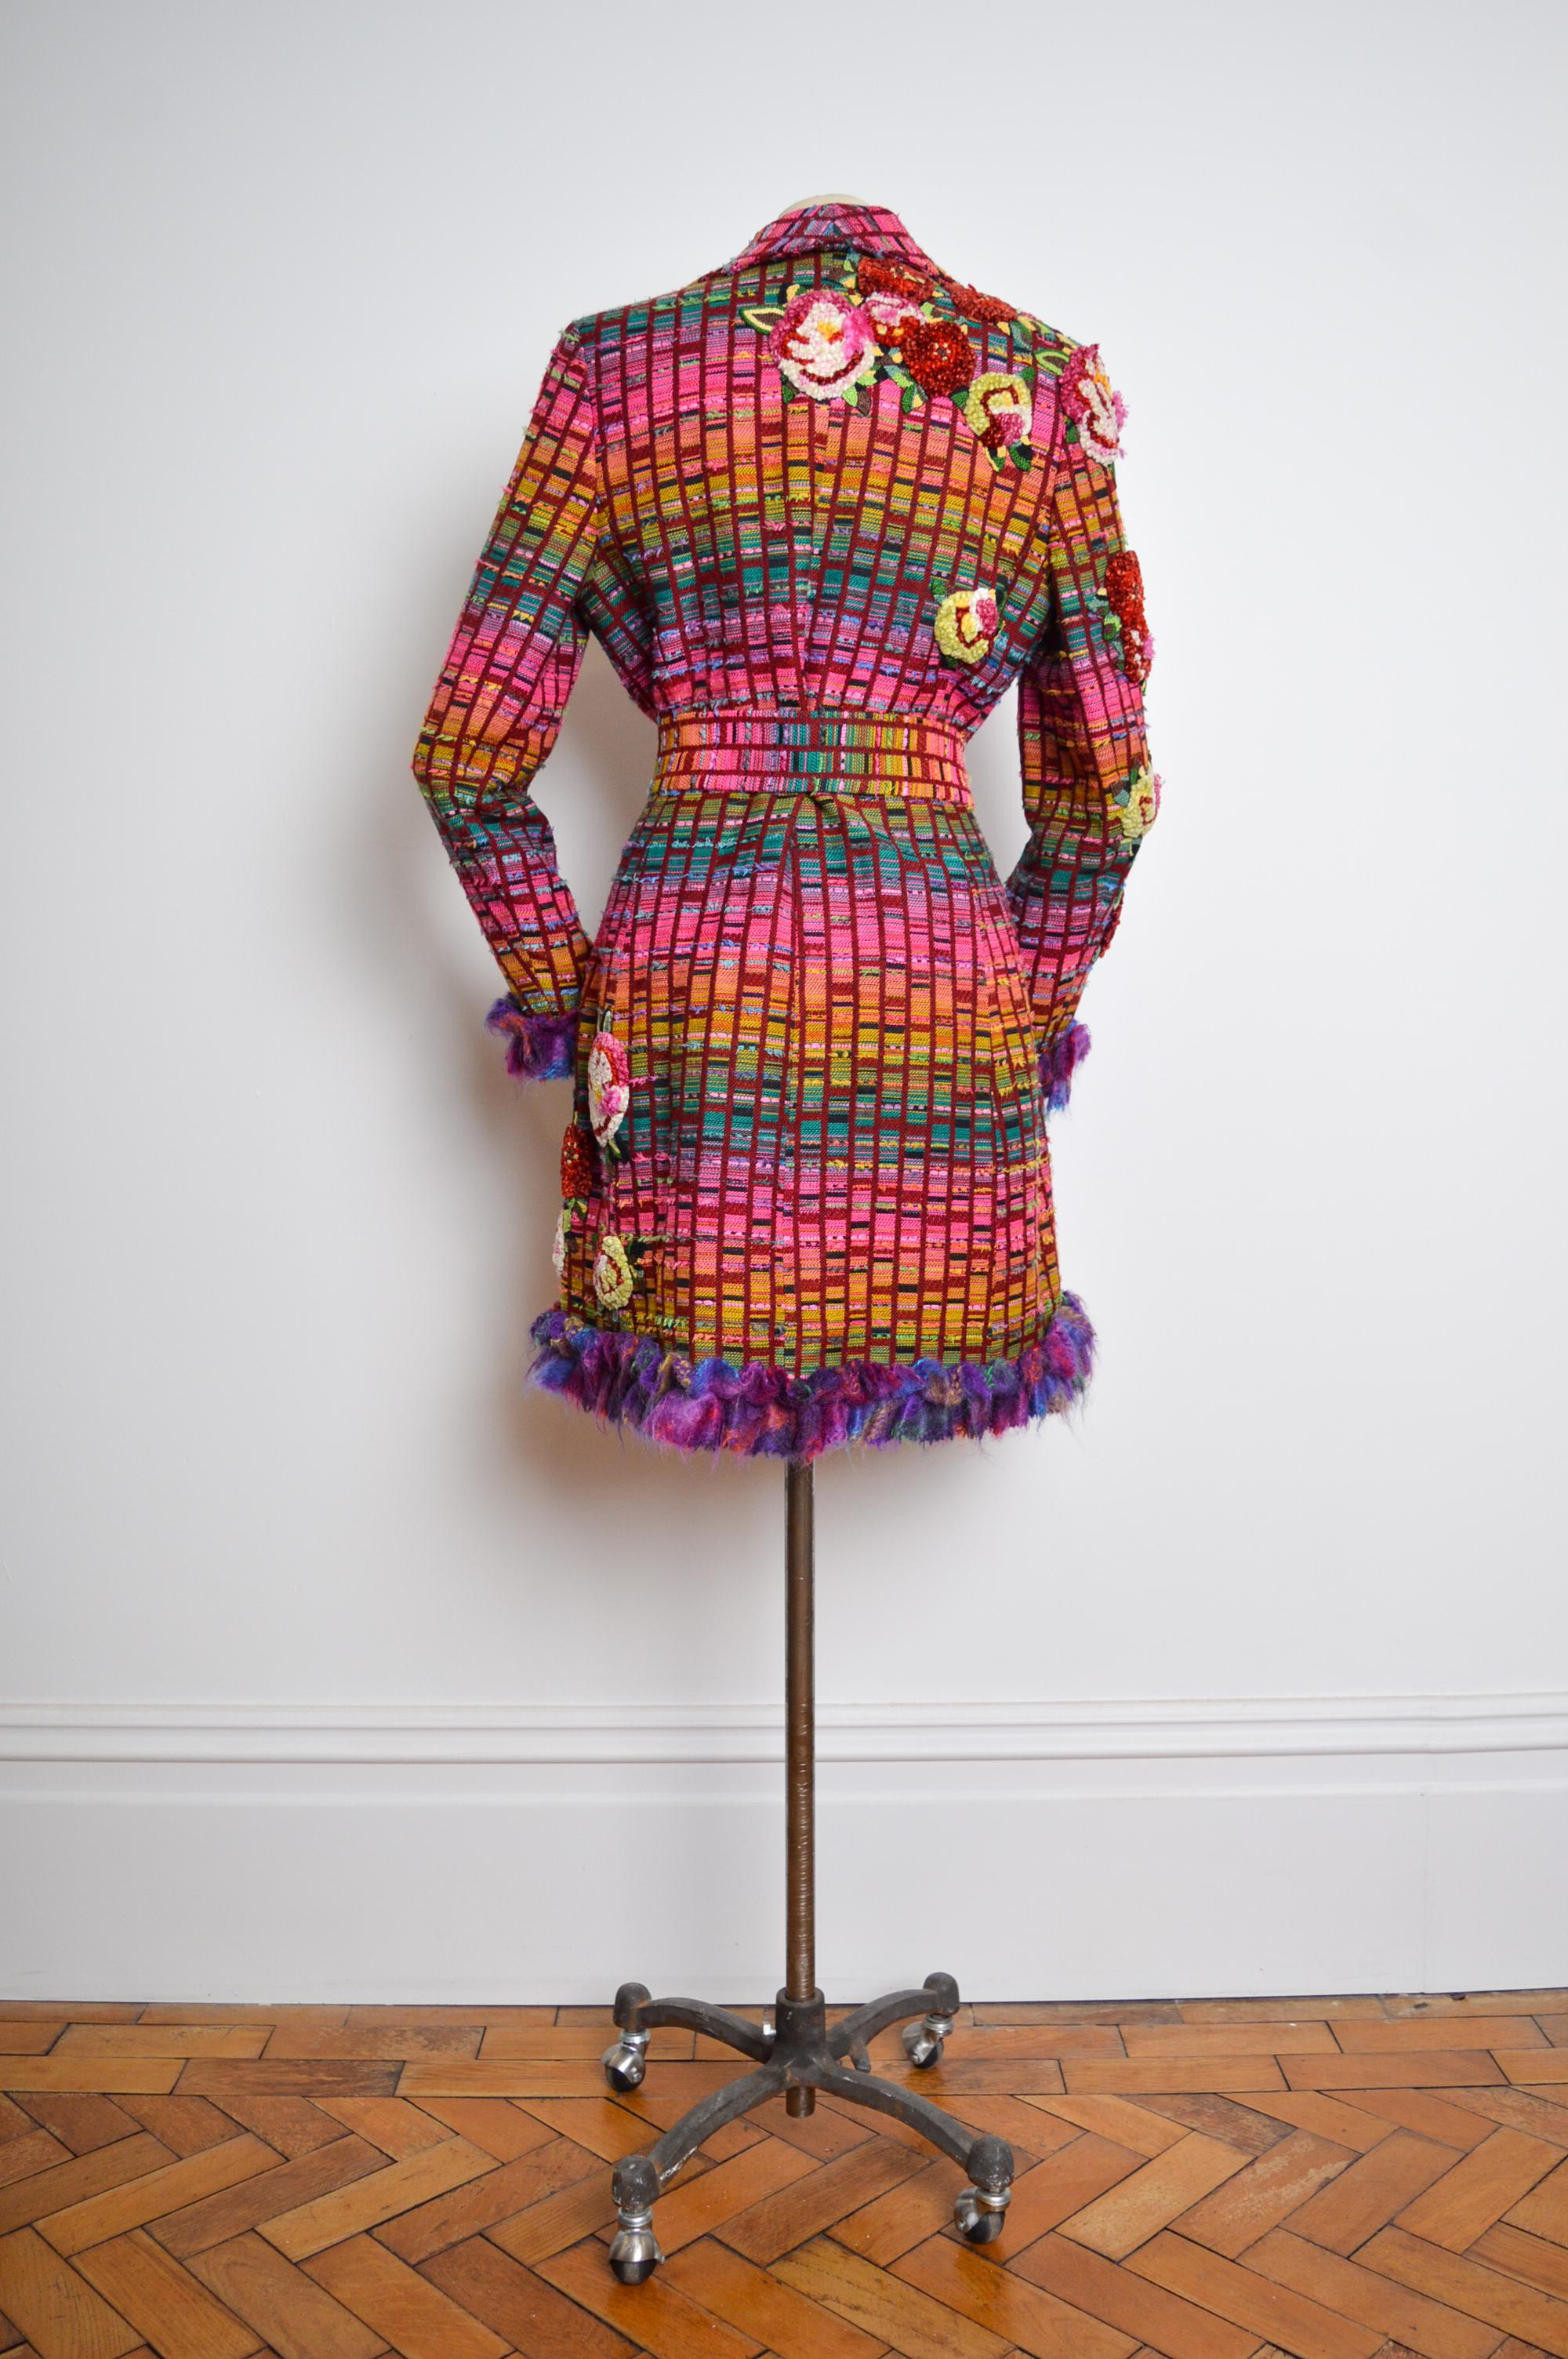 Superb Tweed Mathew Williamson Jewel Tone Embroidered Embellished Coat 8